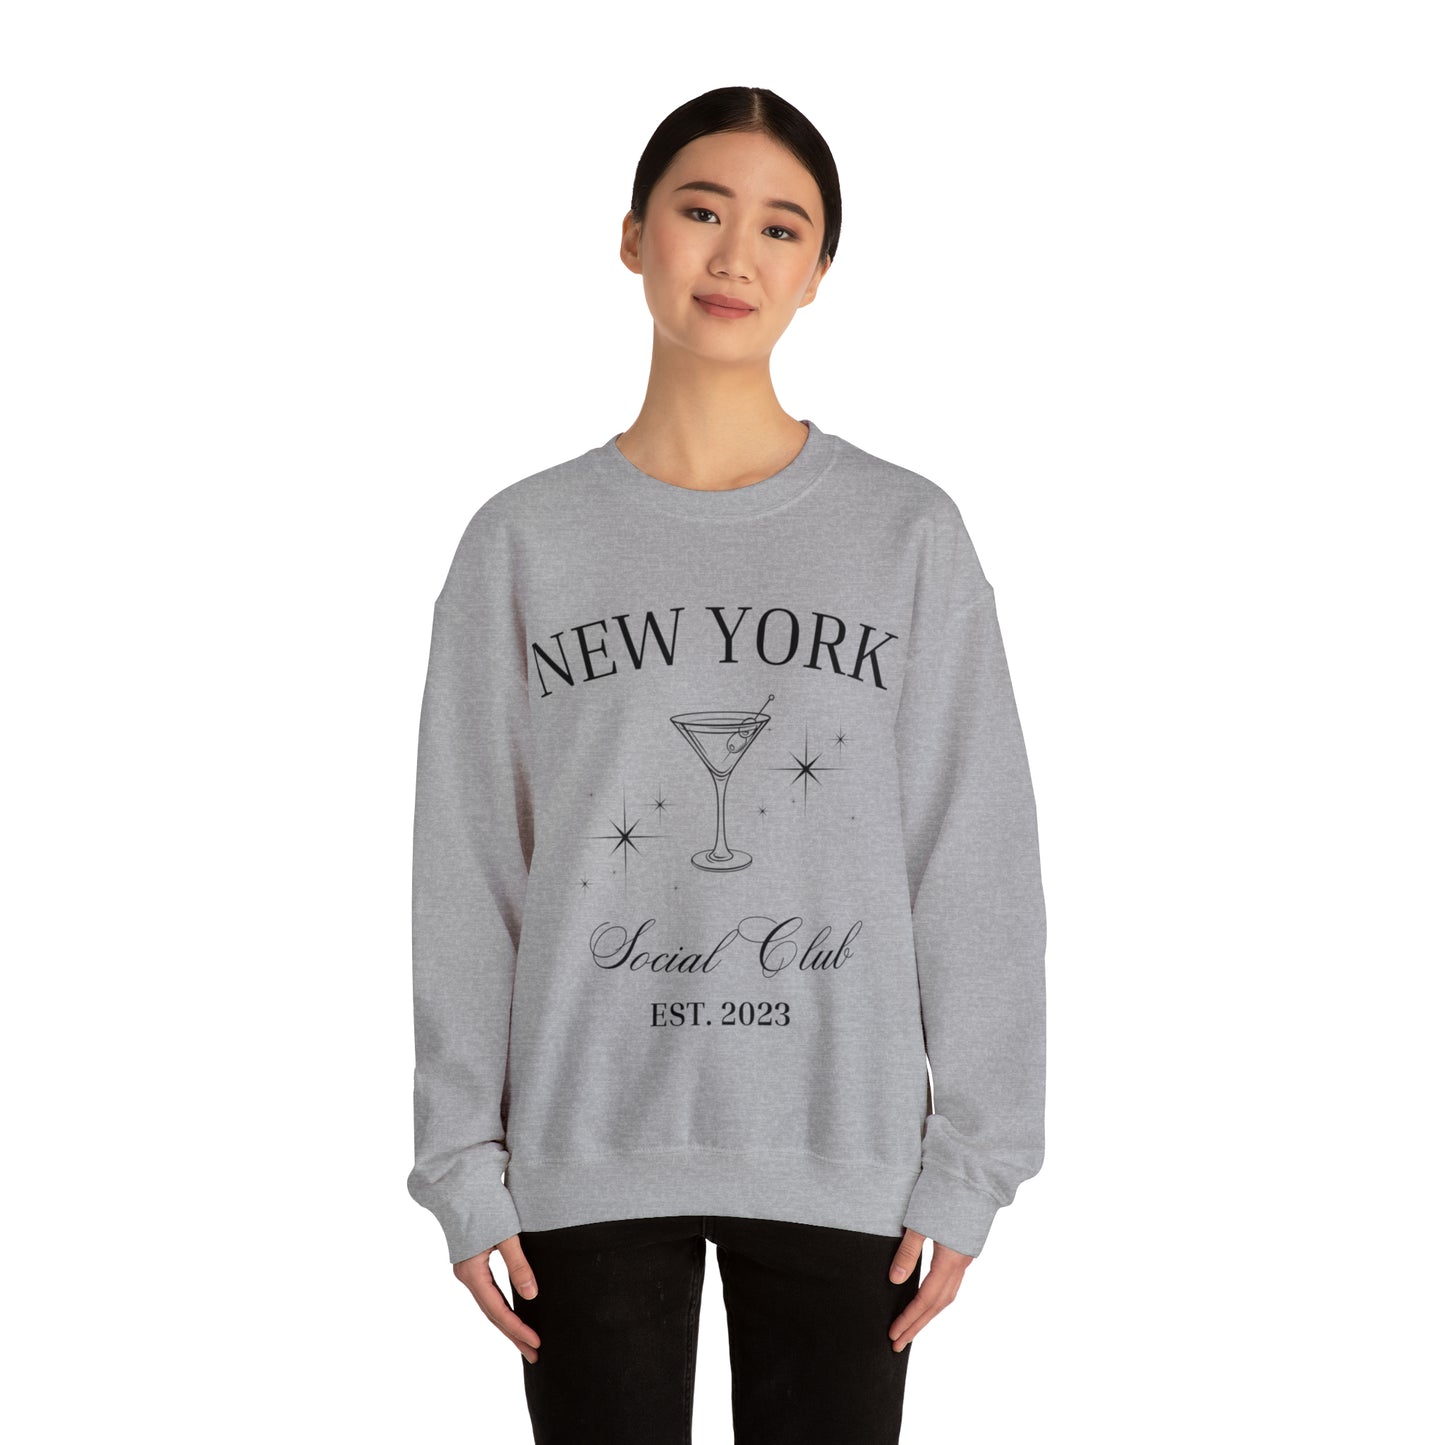 New York Social Club Unisex Heavy Blend™ Crewneck Sweatshirt